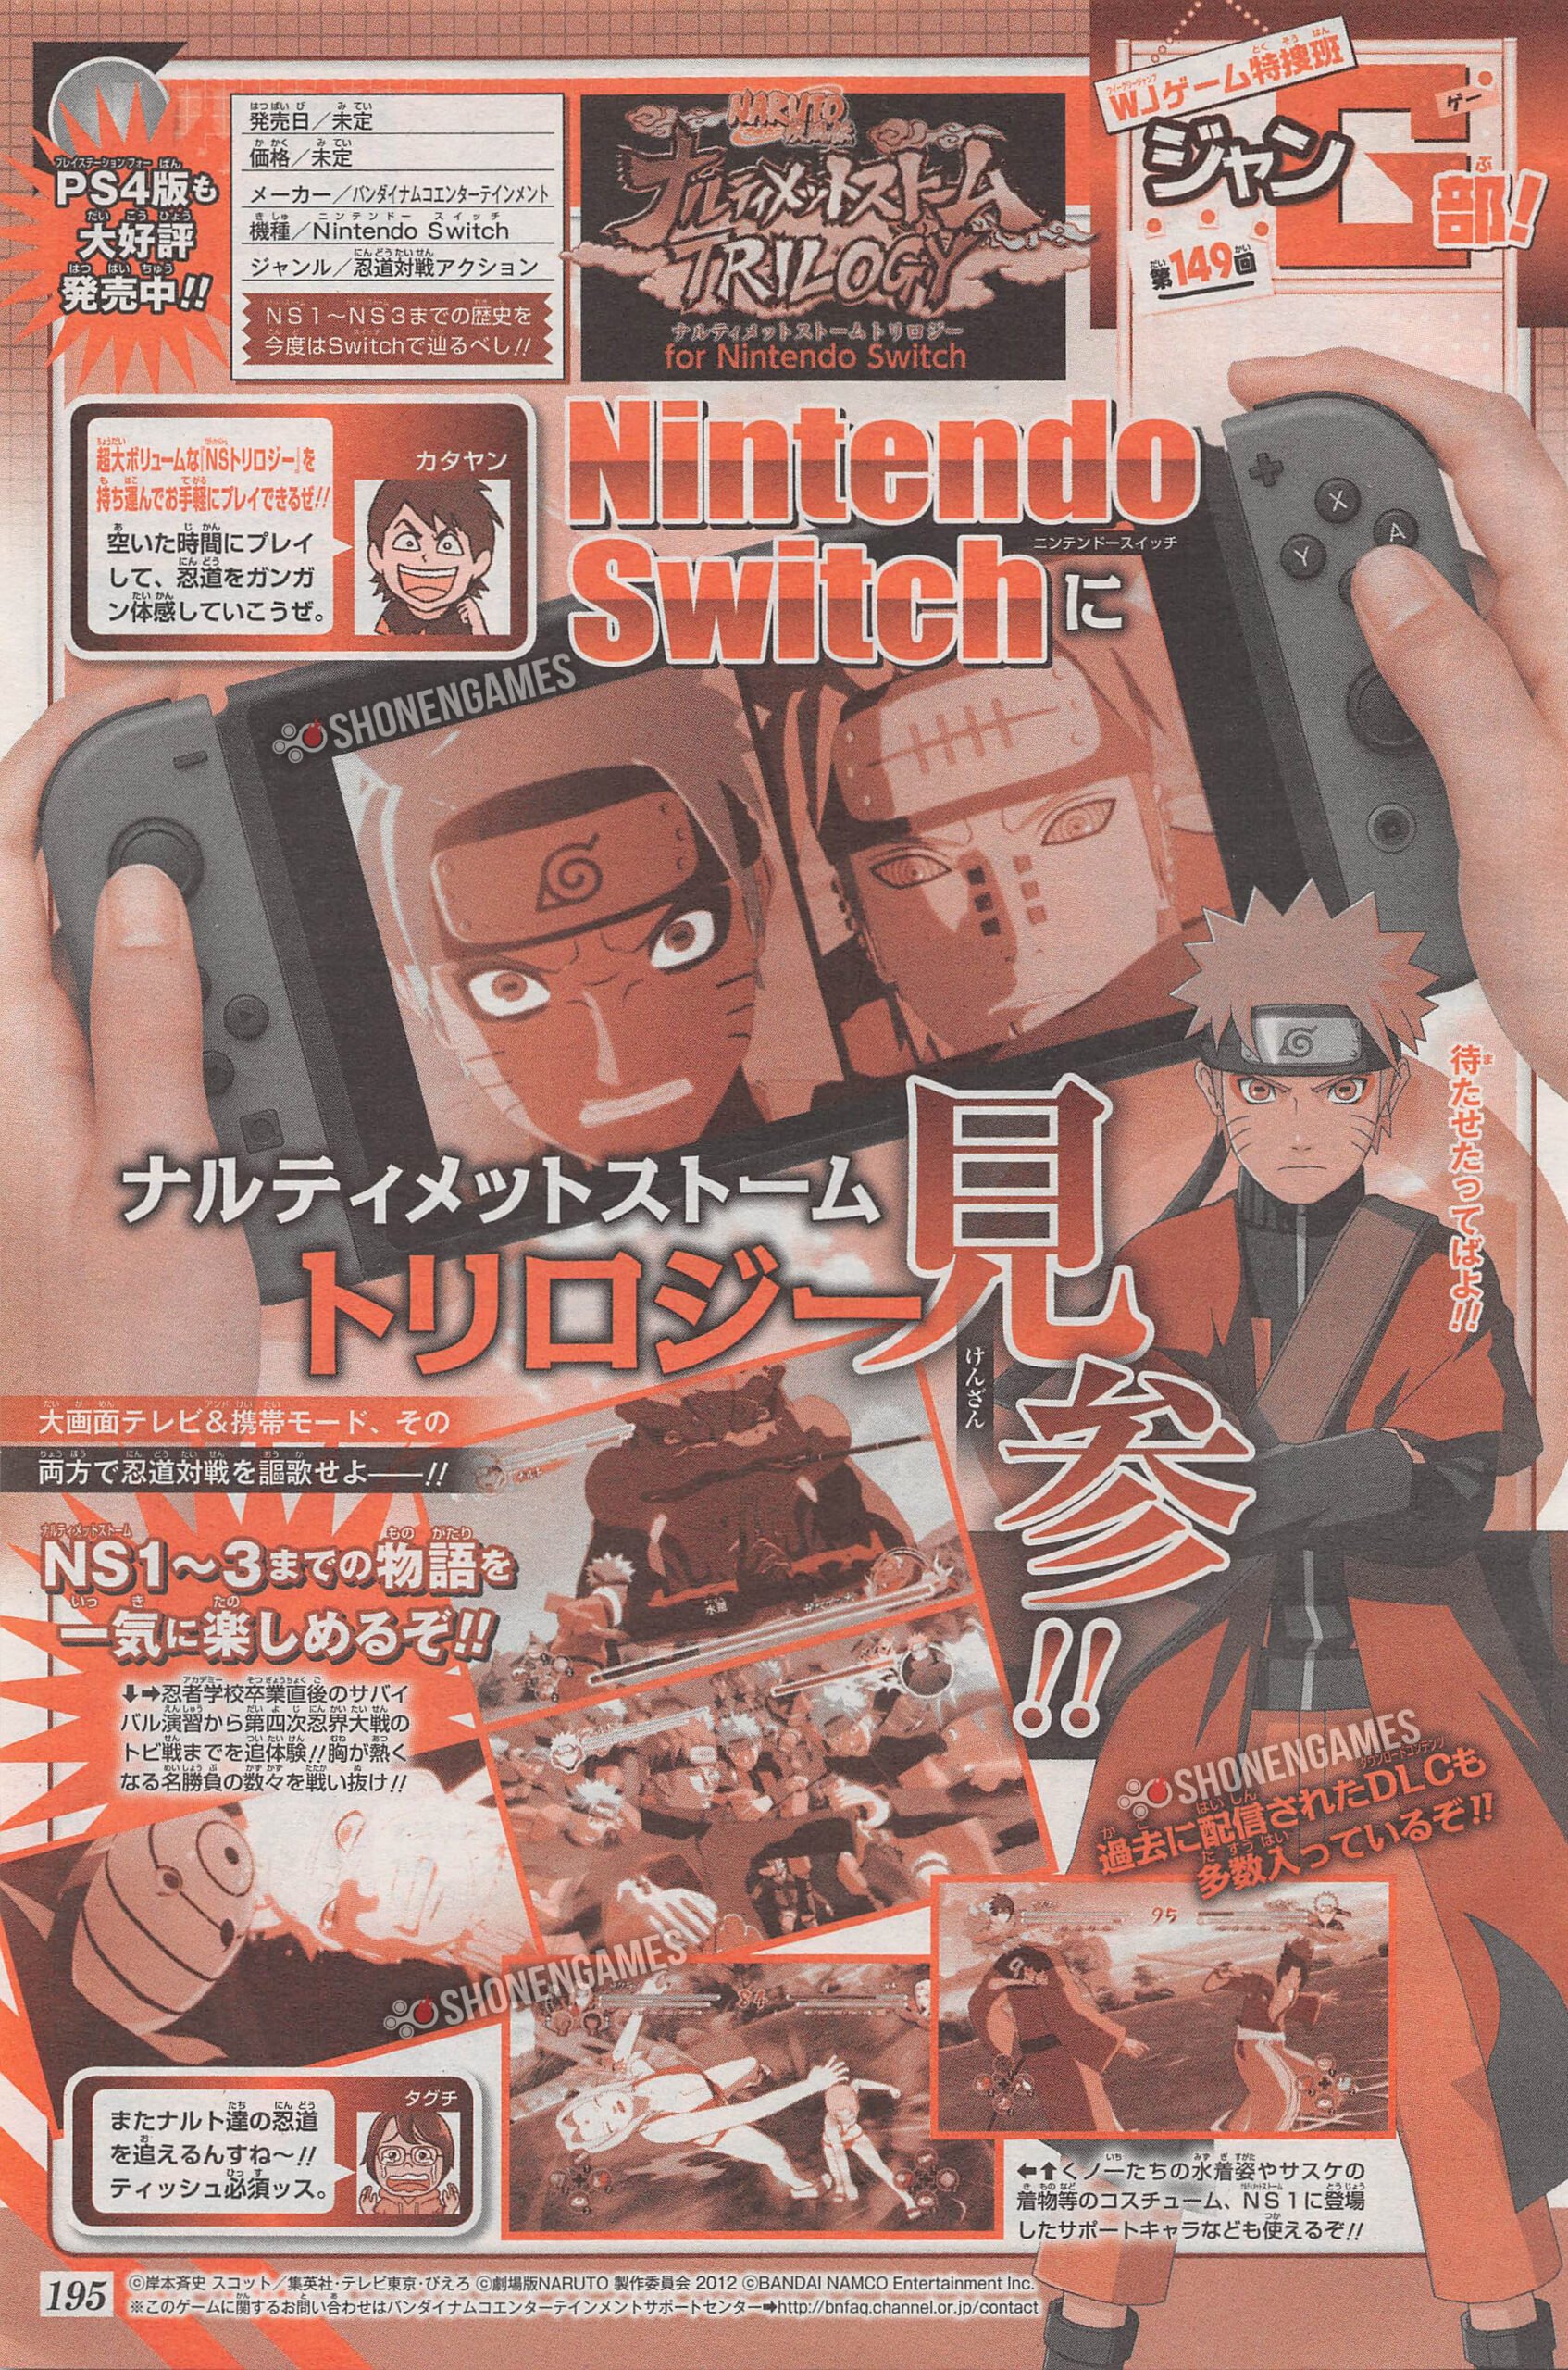 Shippuden: Gematsu Switch - Storm Naruto Ninja Ultimate [Update] coming to Trilogy